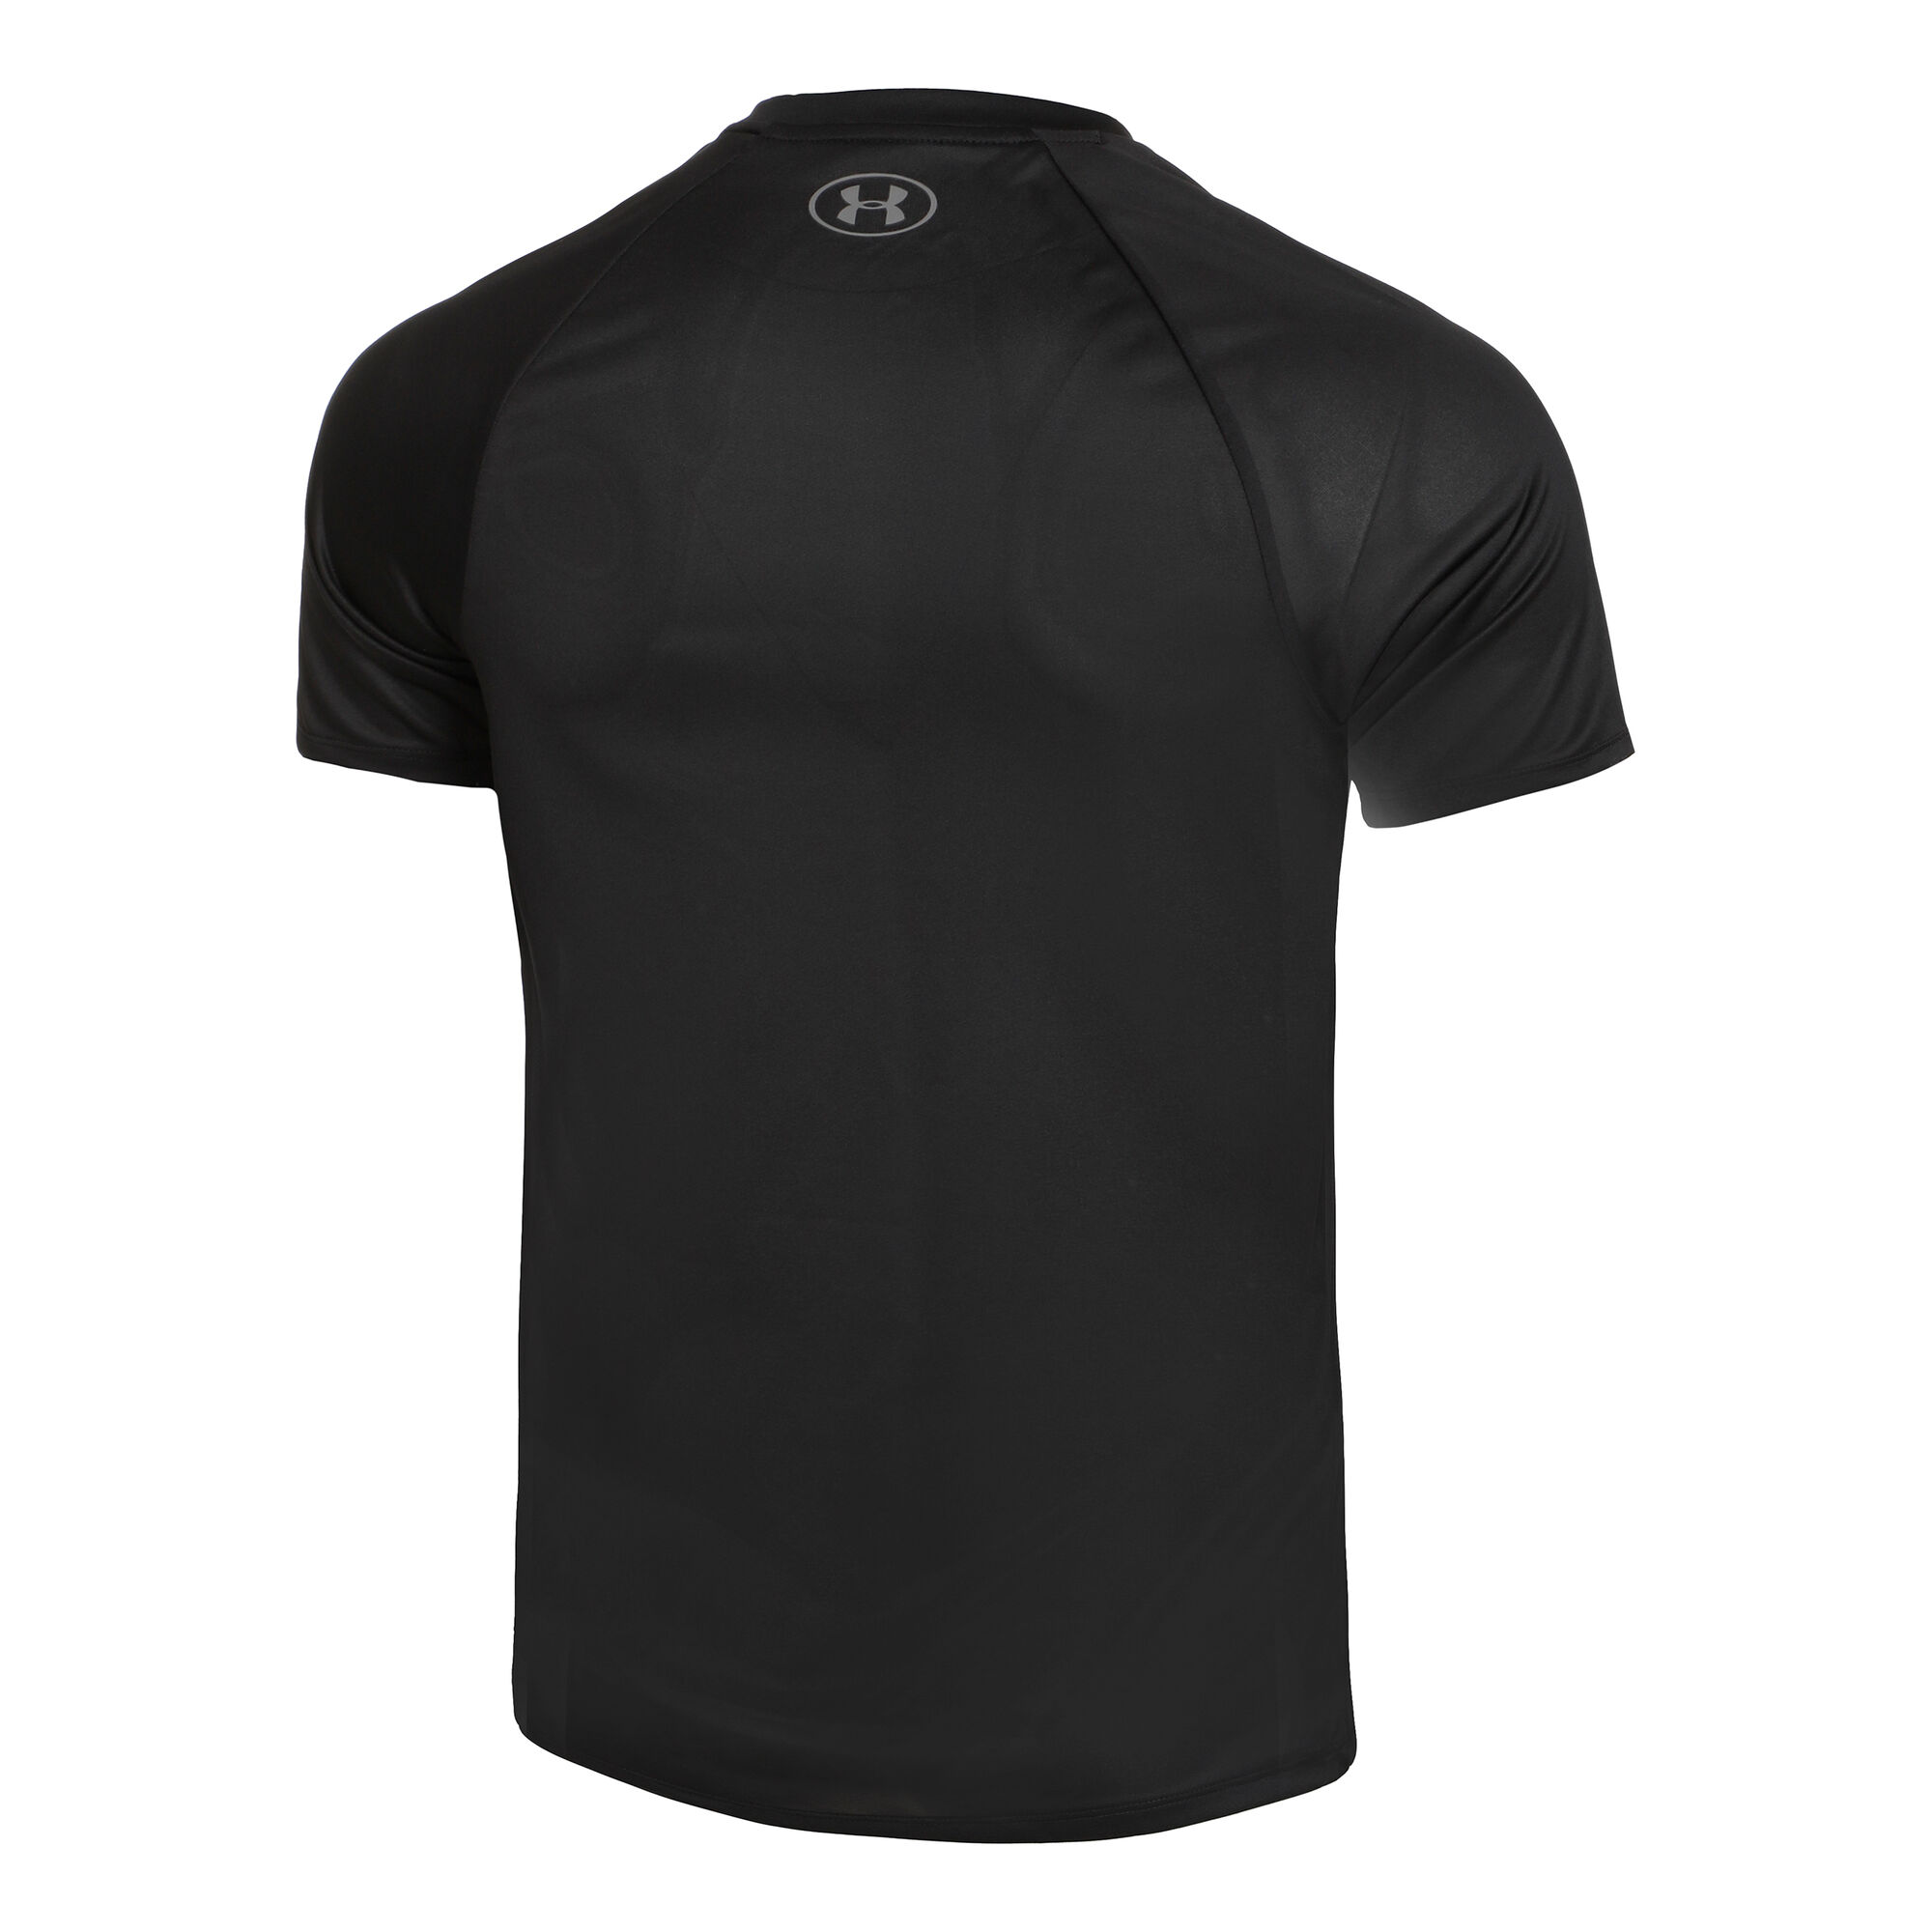 Buy Under Armour Tech 2.0 T-shirt Hommes Noir online